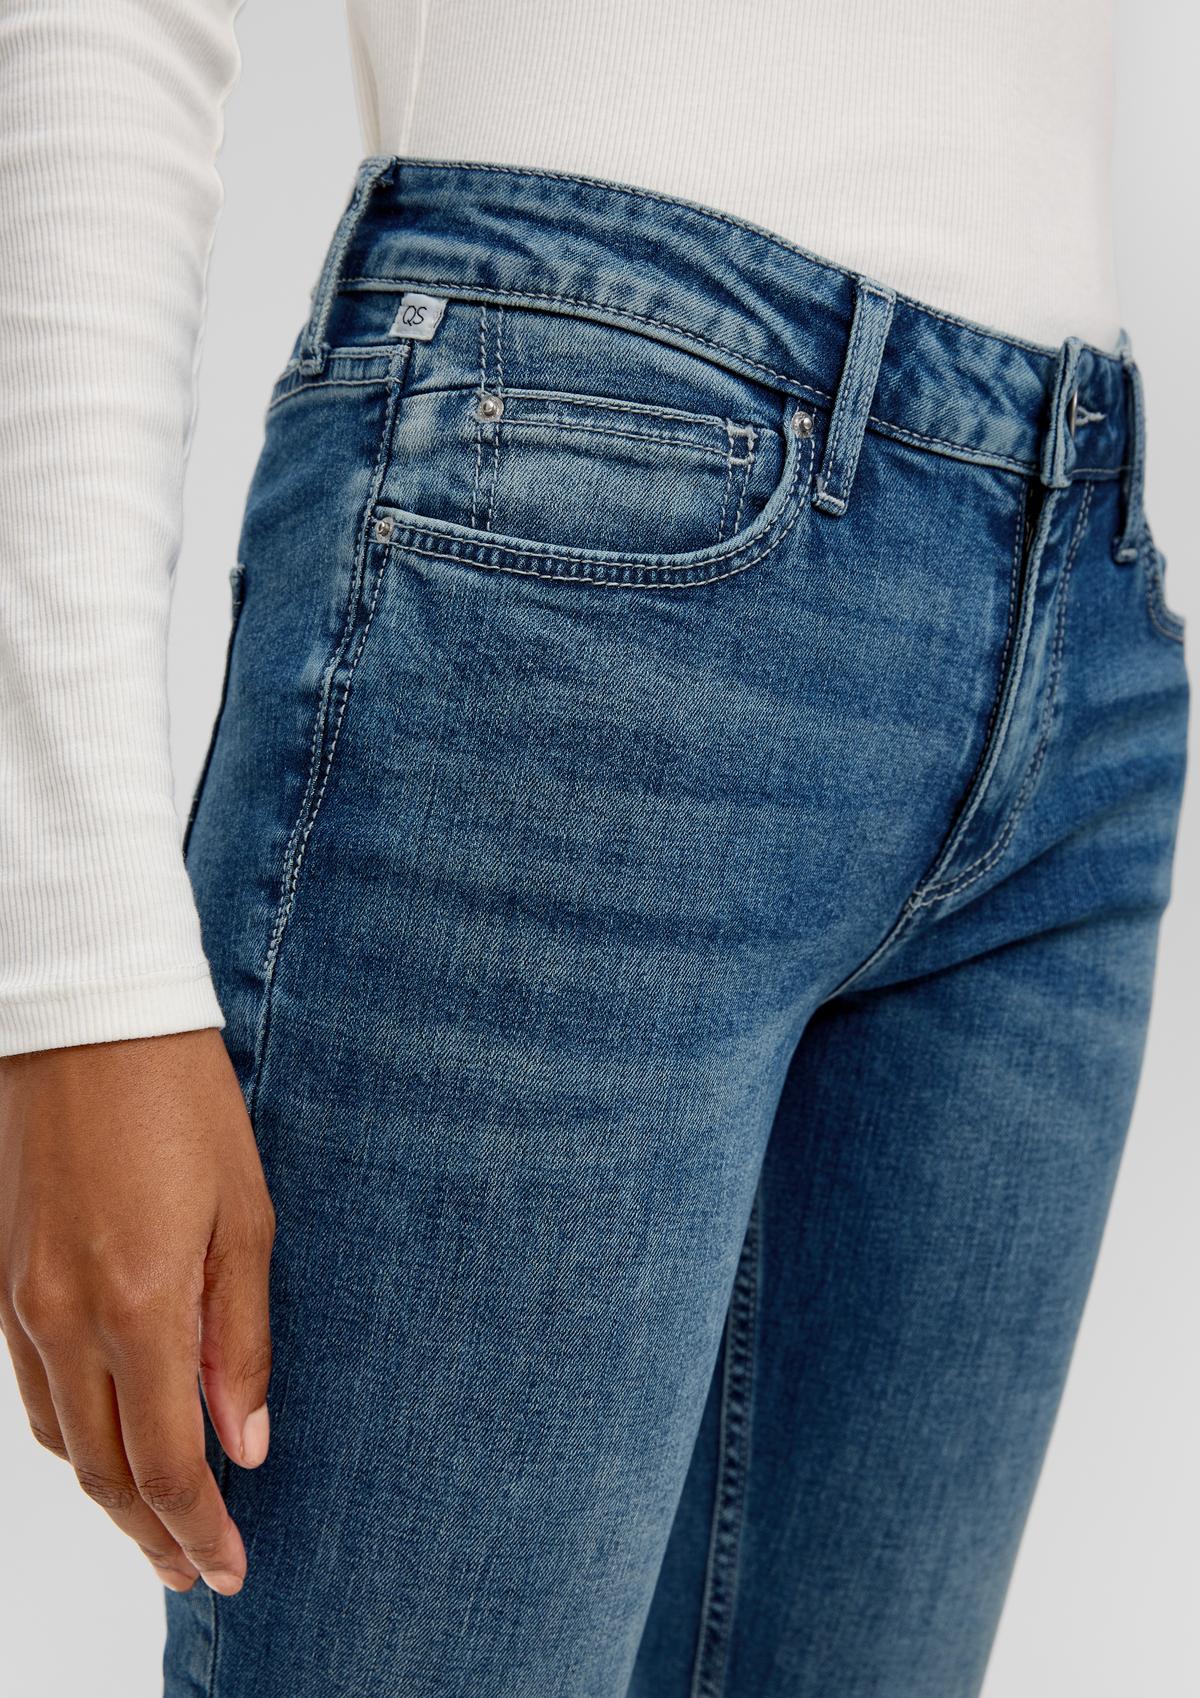 s.Oliver Sadie jeans / skinny fit / mid rise / skinny leg / stretch cotton